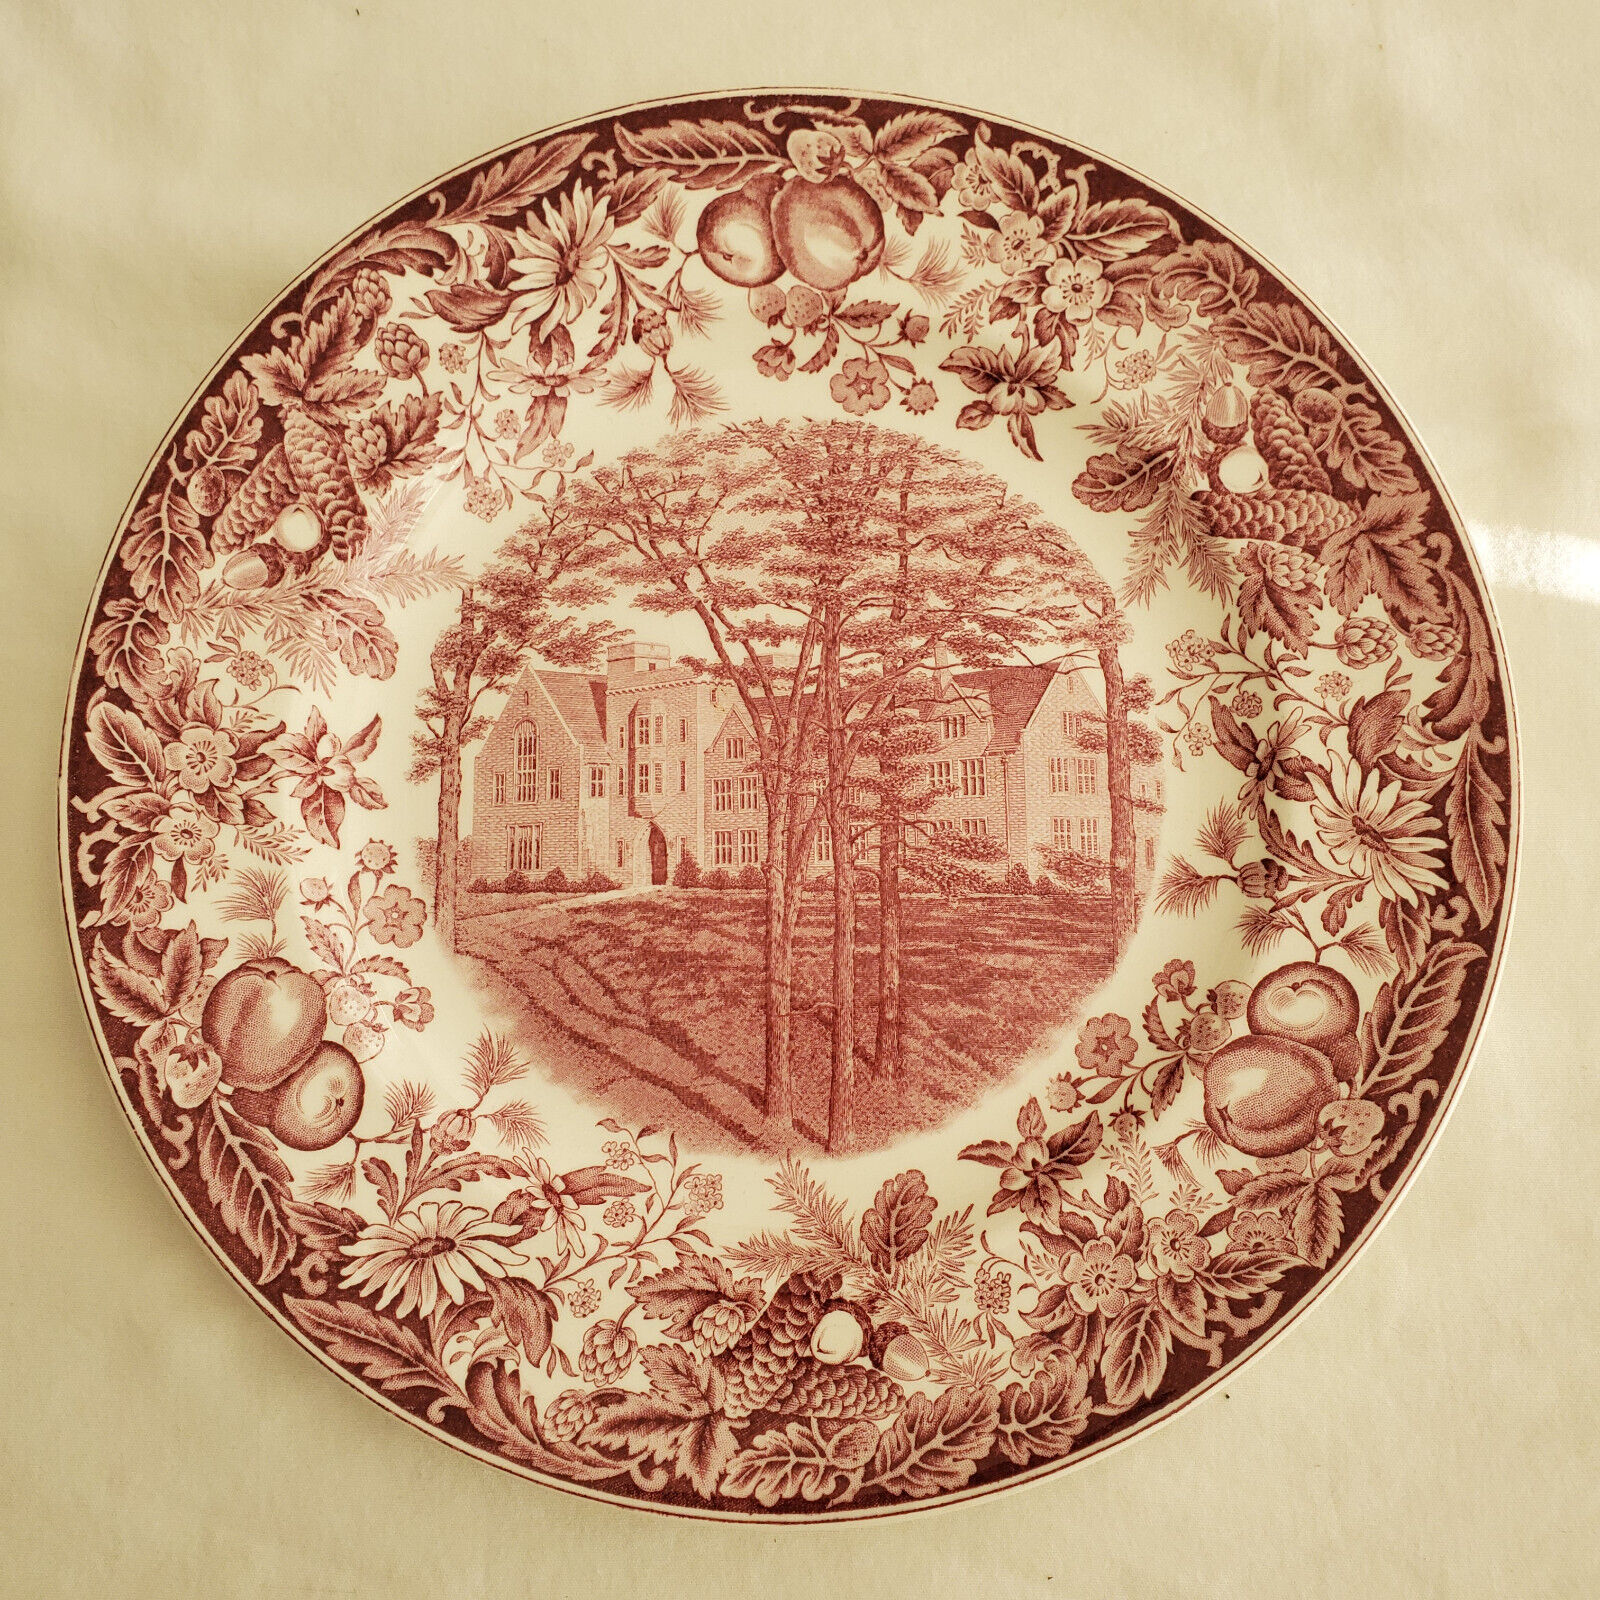 Vassar College Rare Wedgwood Commemorative Plate - Blodgett Hall, Excellent Cond